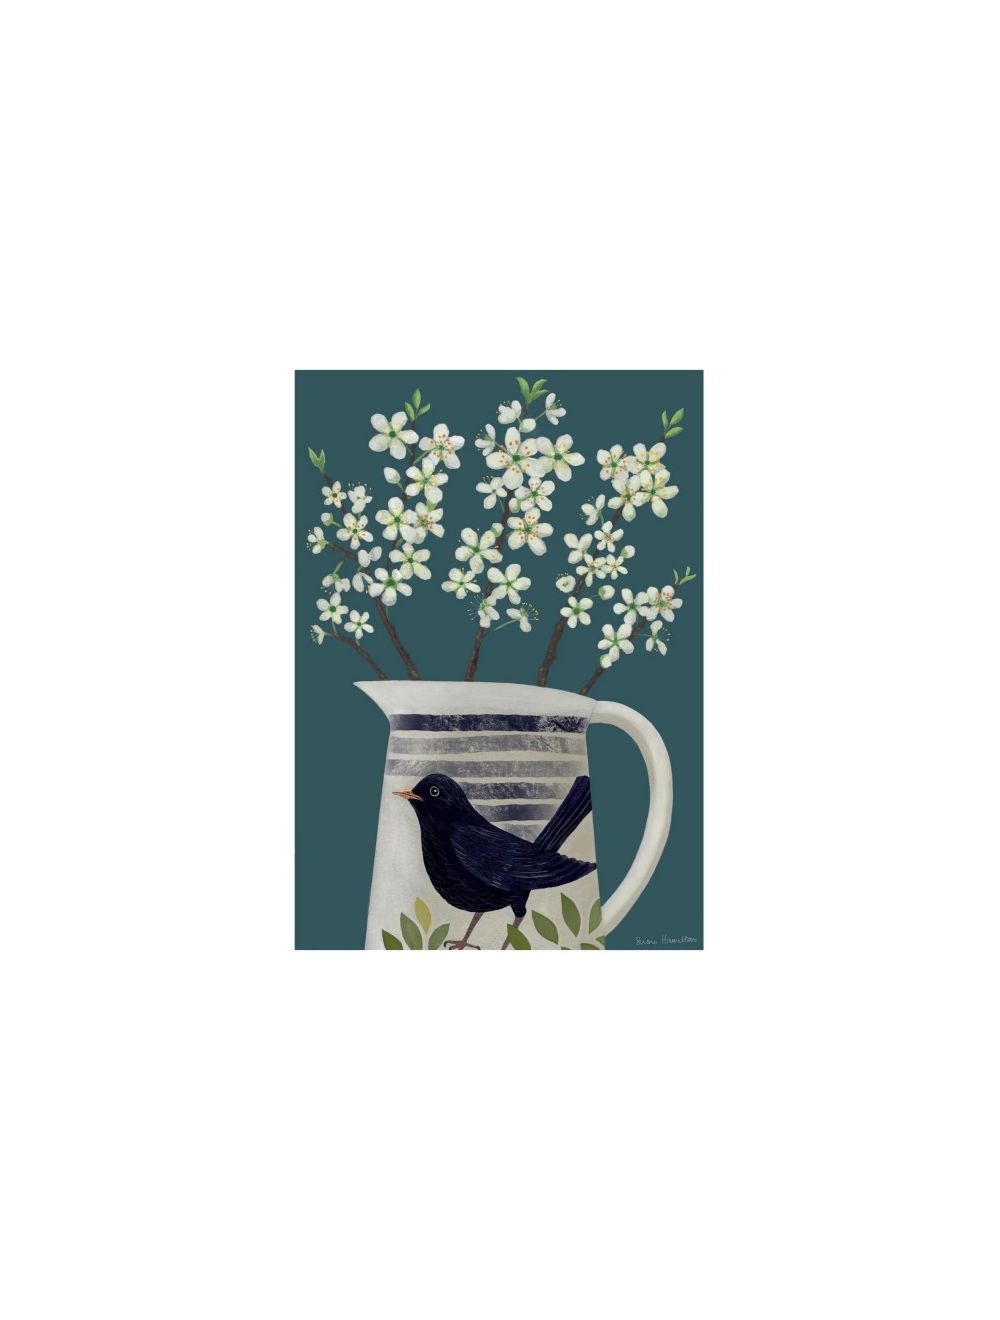 Blossom in Blackbird jug card by Susie Hamilton